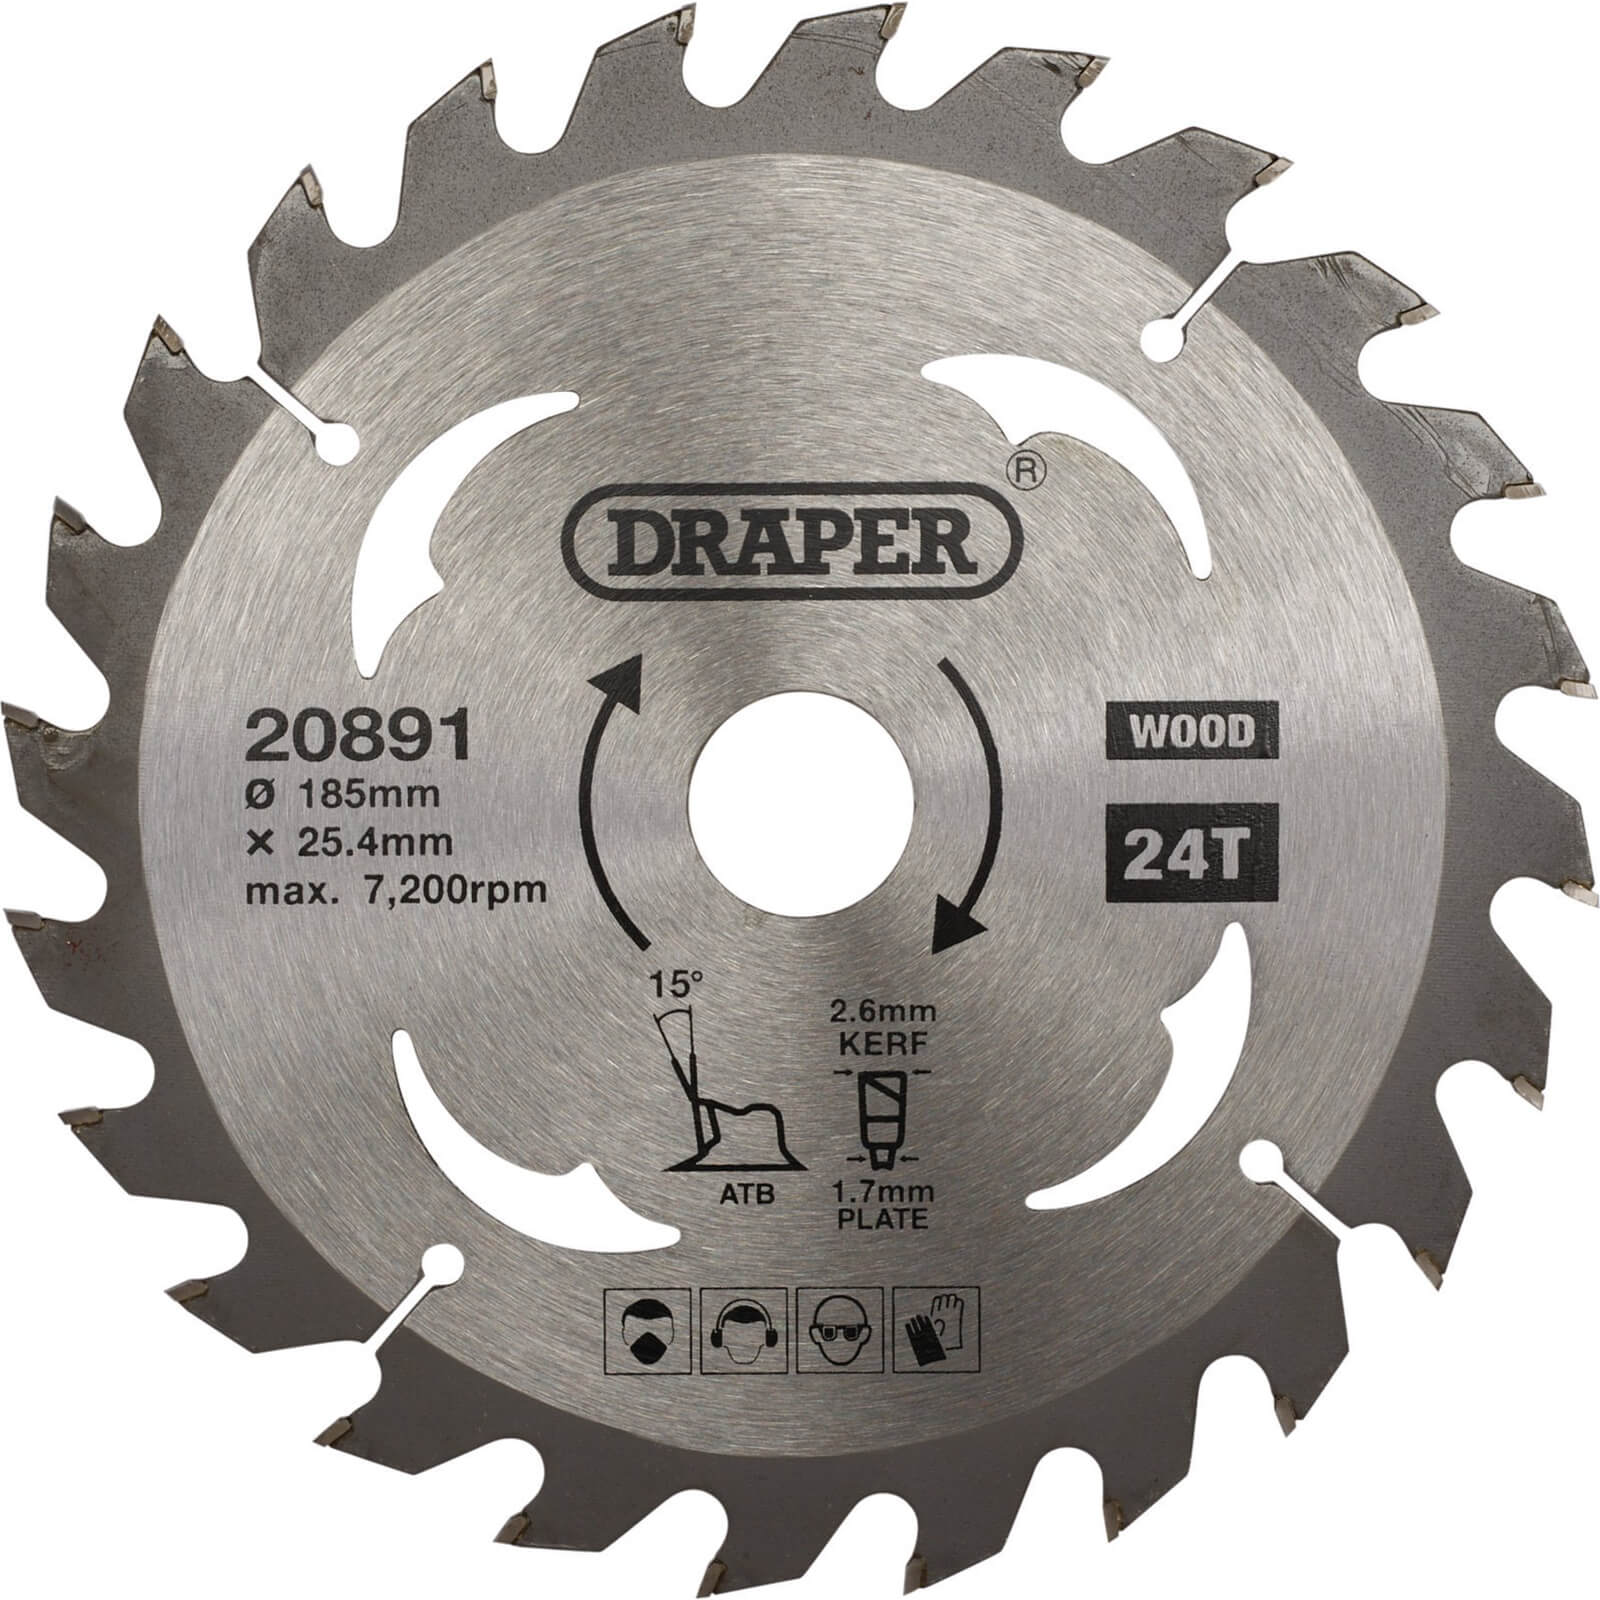 Image of Draper TCT Wood Cutting Circular Saw Blade 185mm 24T 25.4mm